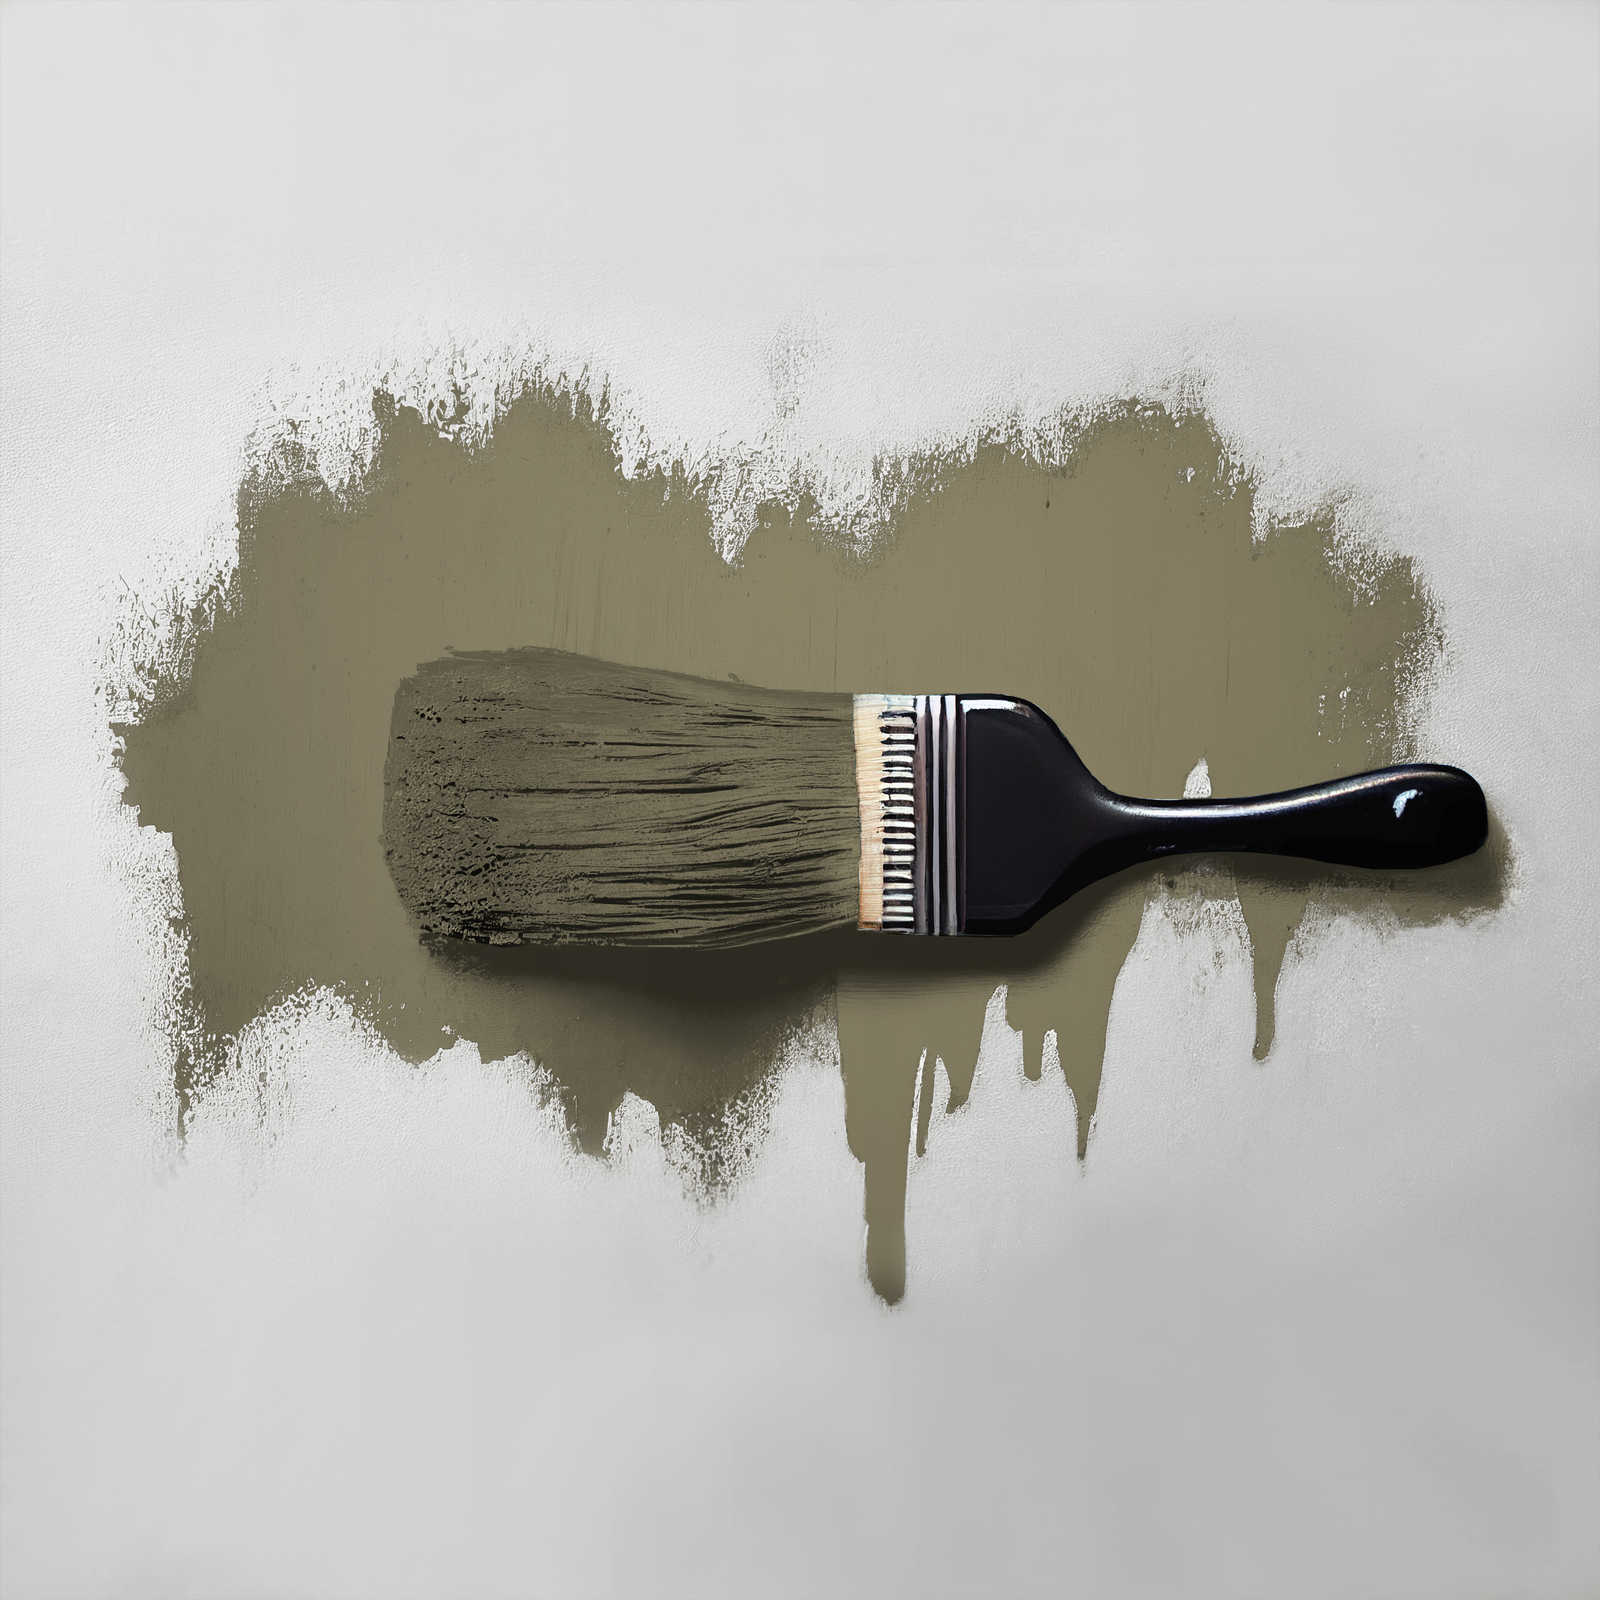             Pittura murale TCK4013 »Ordinary Olive« in tonalità oliva intensiva – 2,5 litri
        